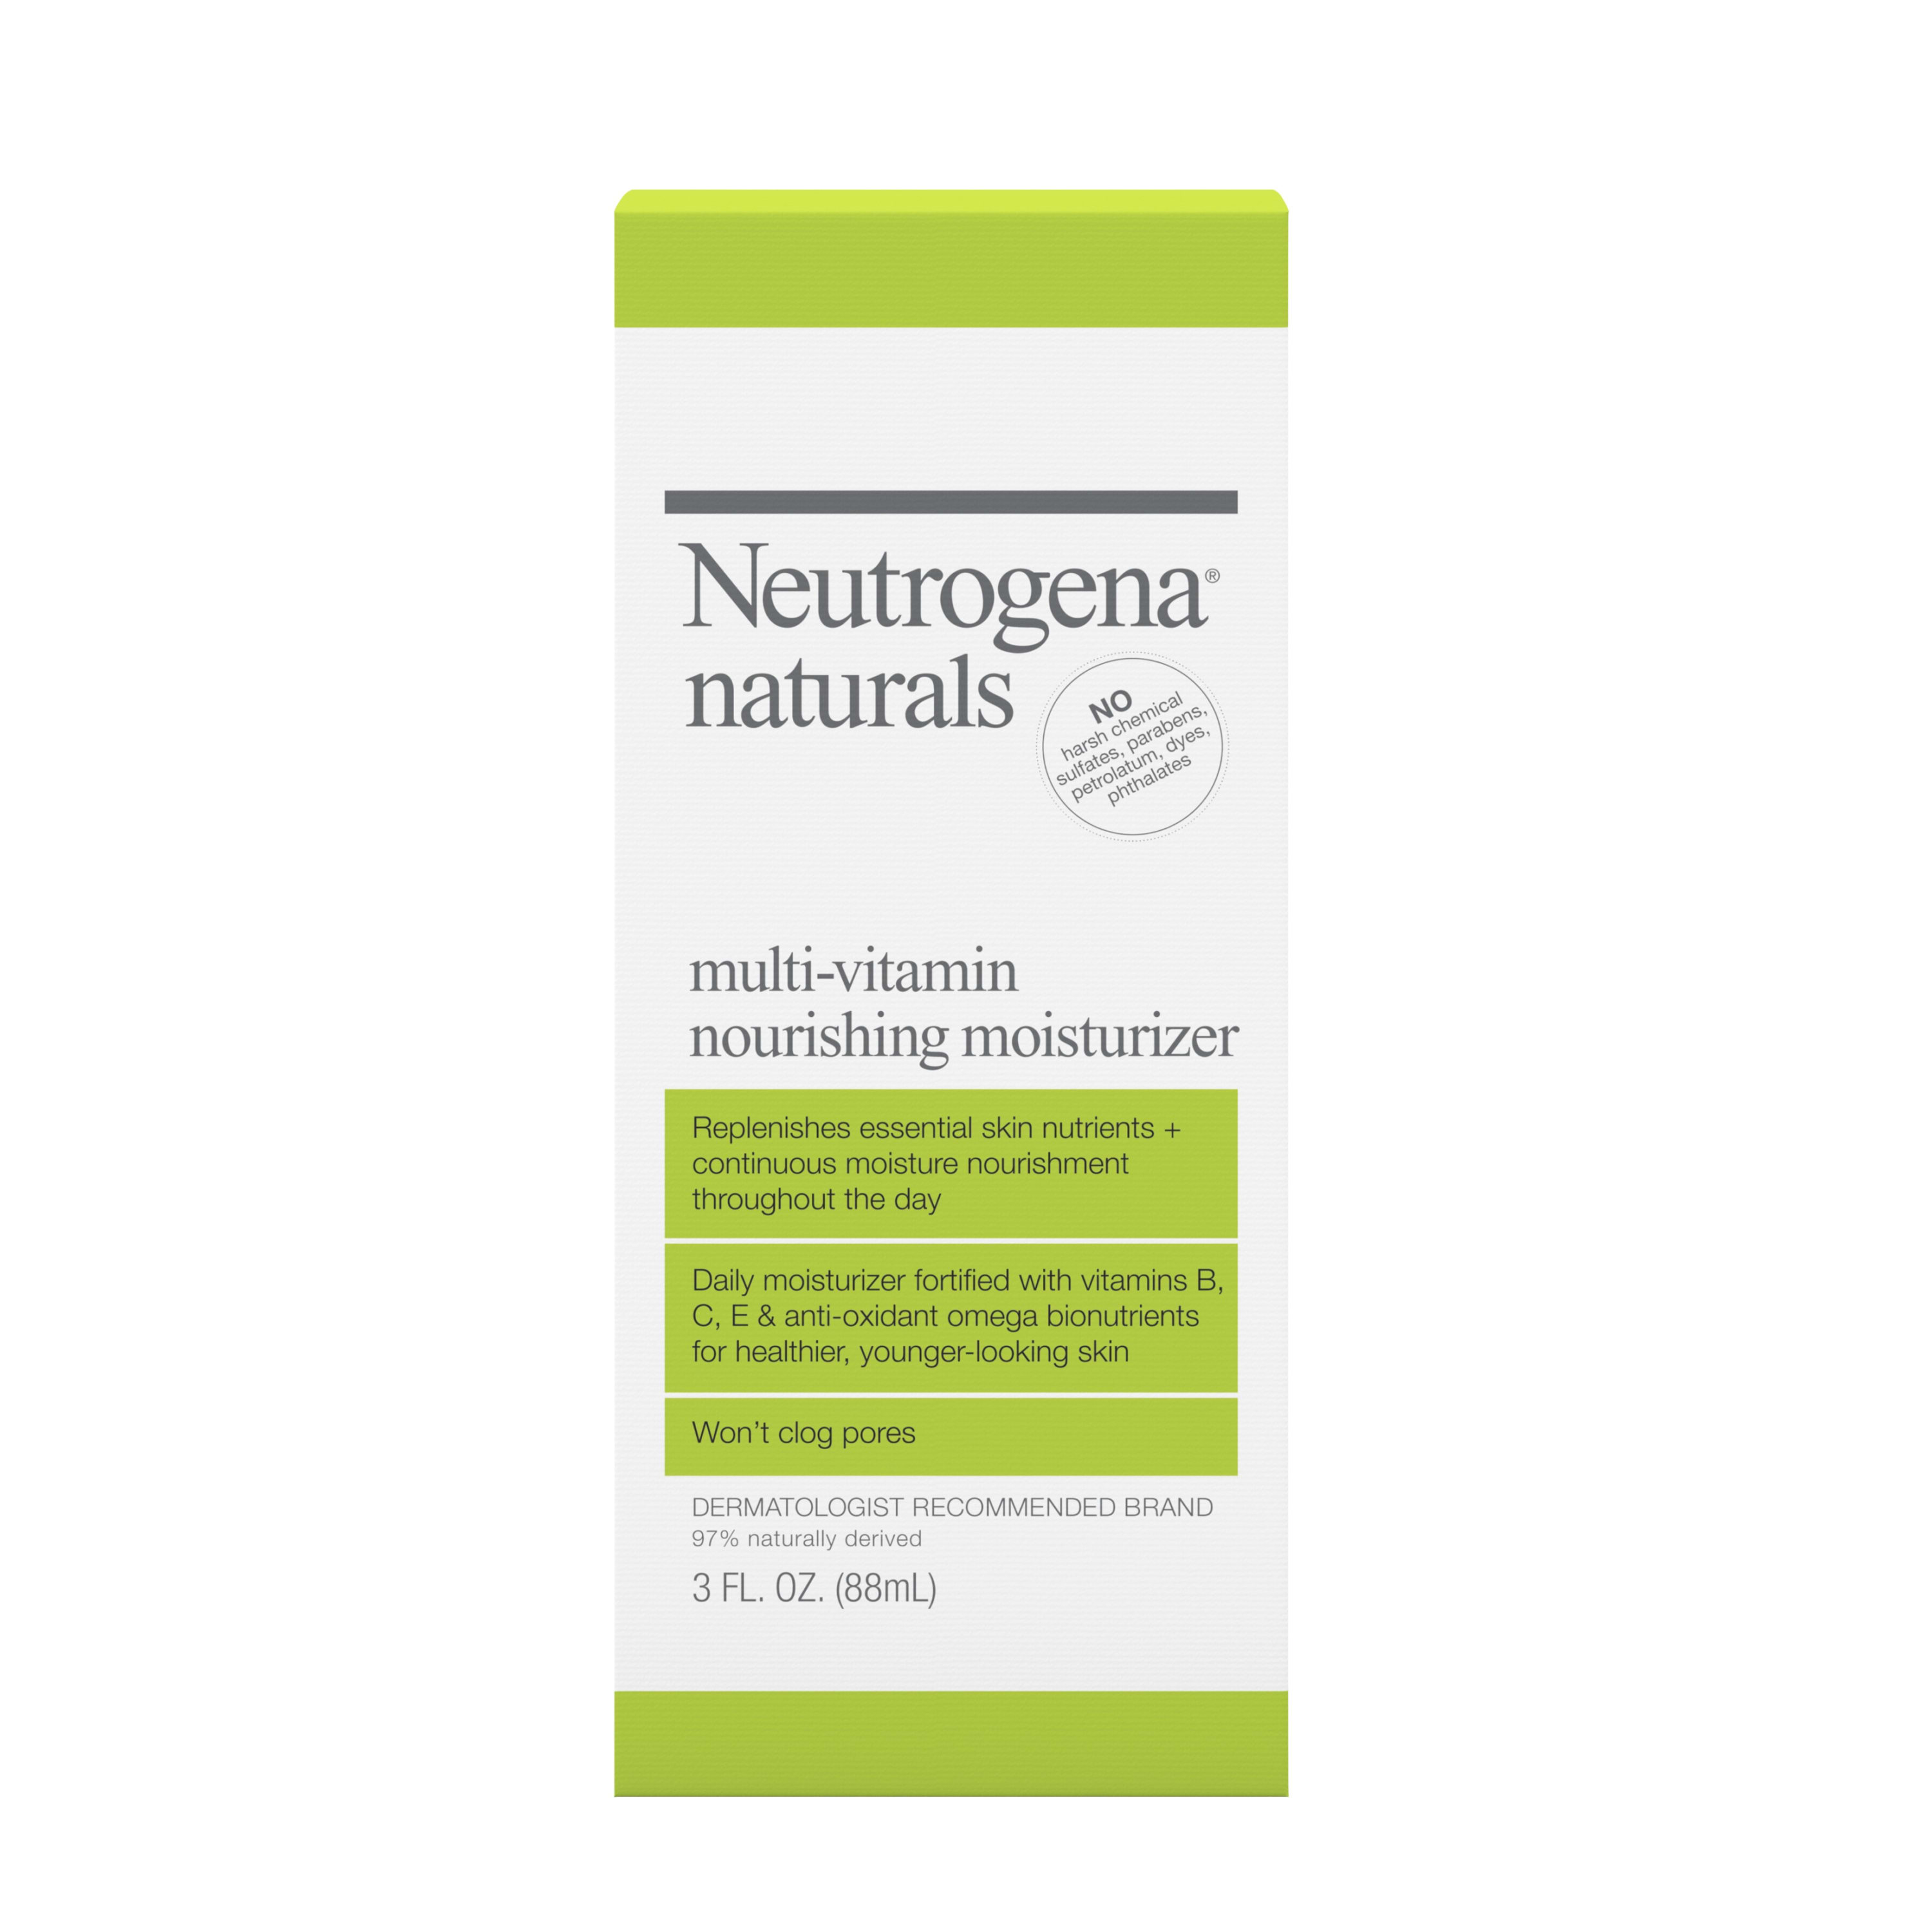 Neutrogena Naturals Multi-Vitamin Nourishing Daily Face Moisturizer, 3 fl oz - image 4 of 9